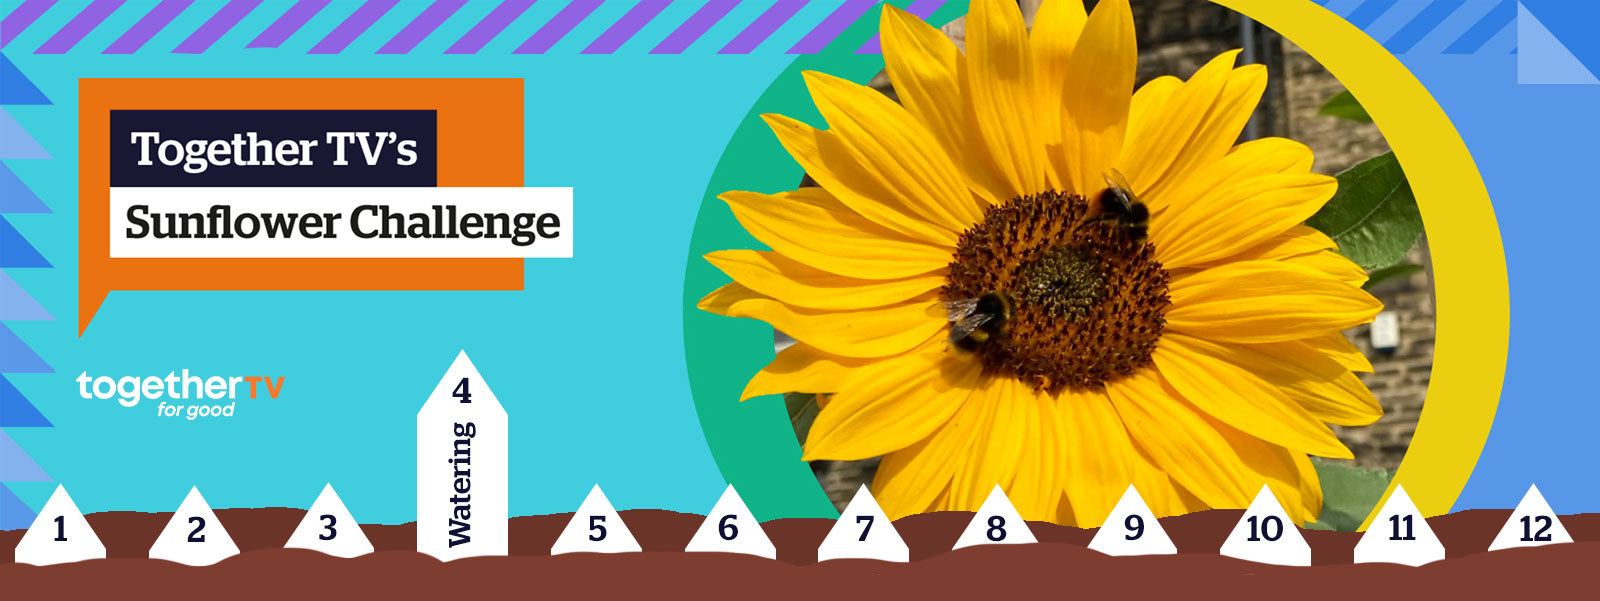 Together TV's Sunflower Challenge - week 4:watering